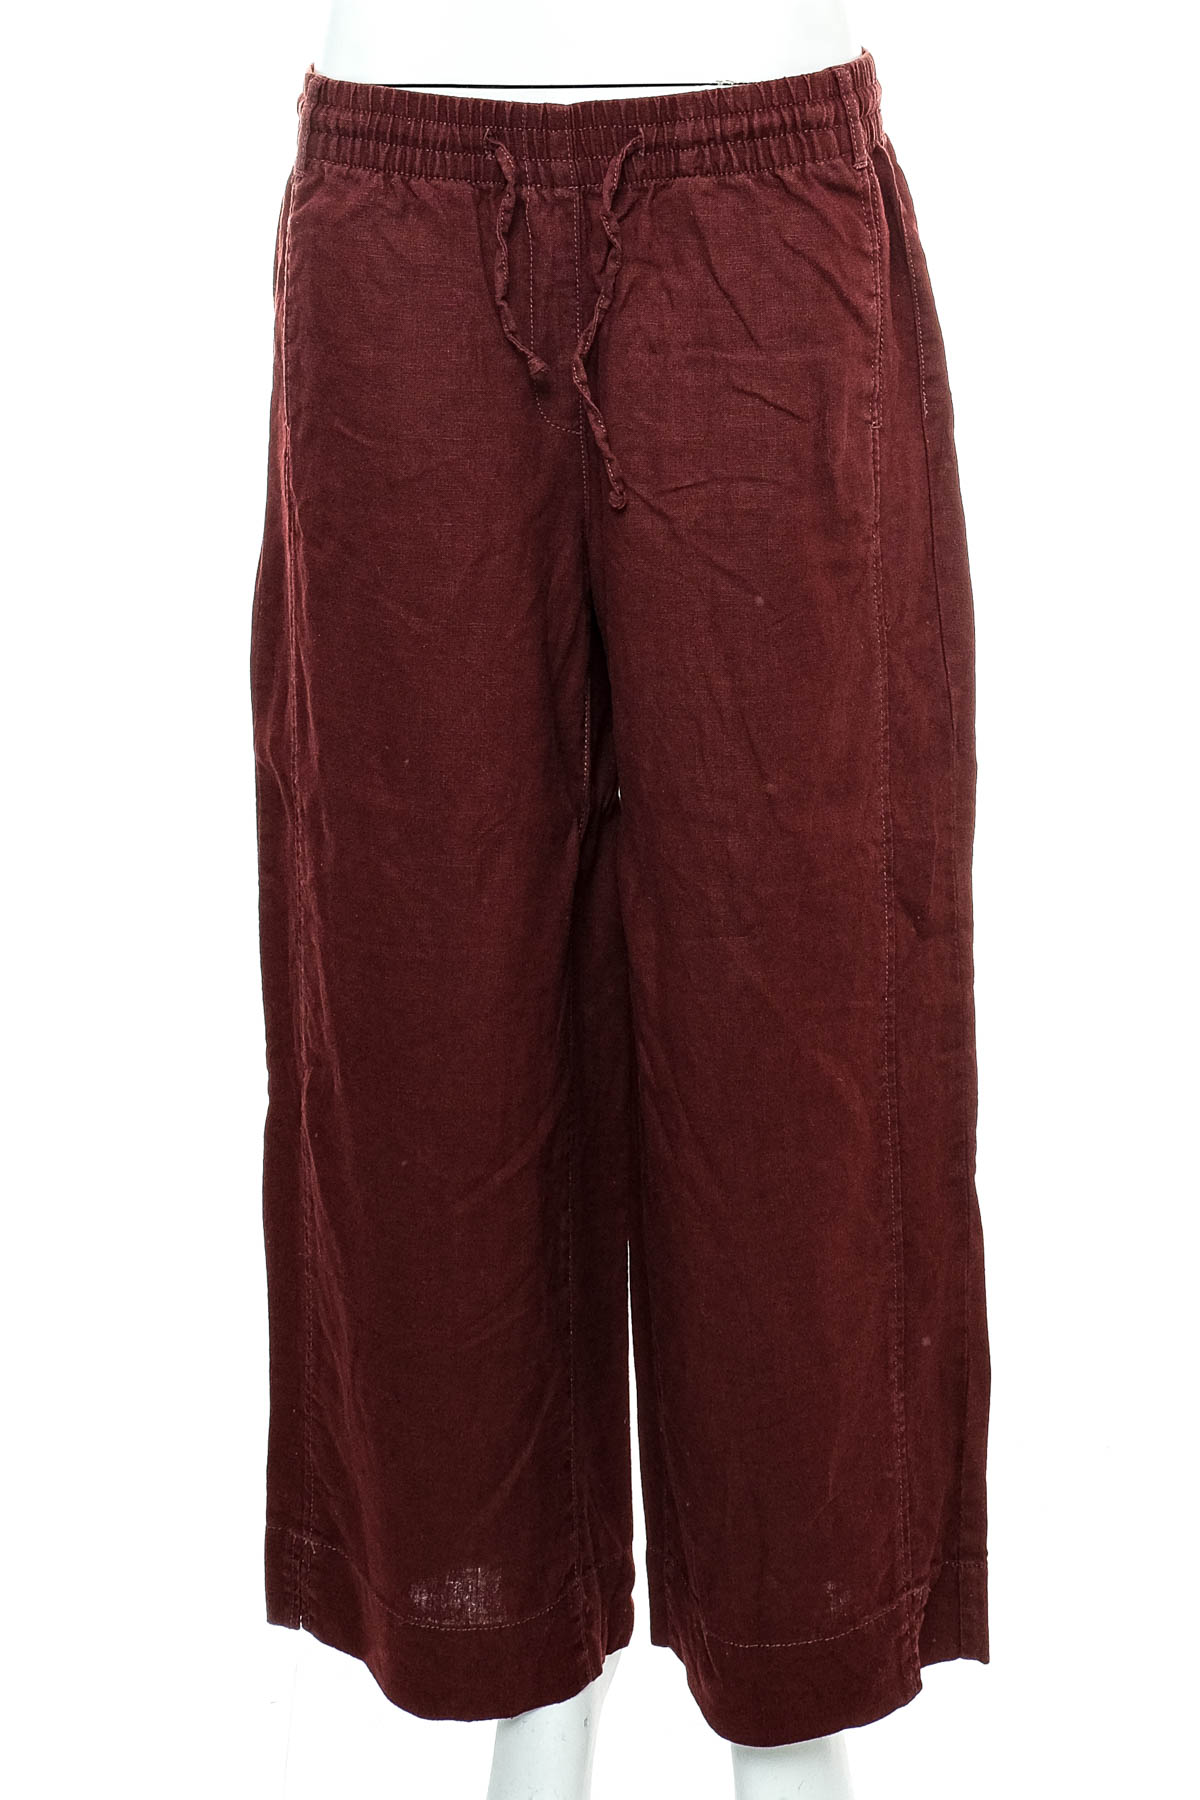 Women's trousers - GERRY WEBER - 0